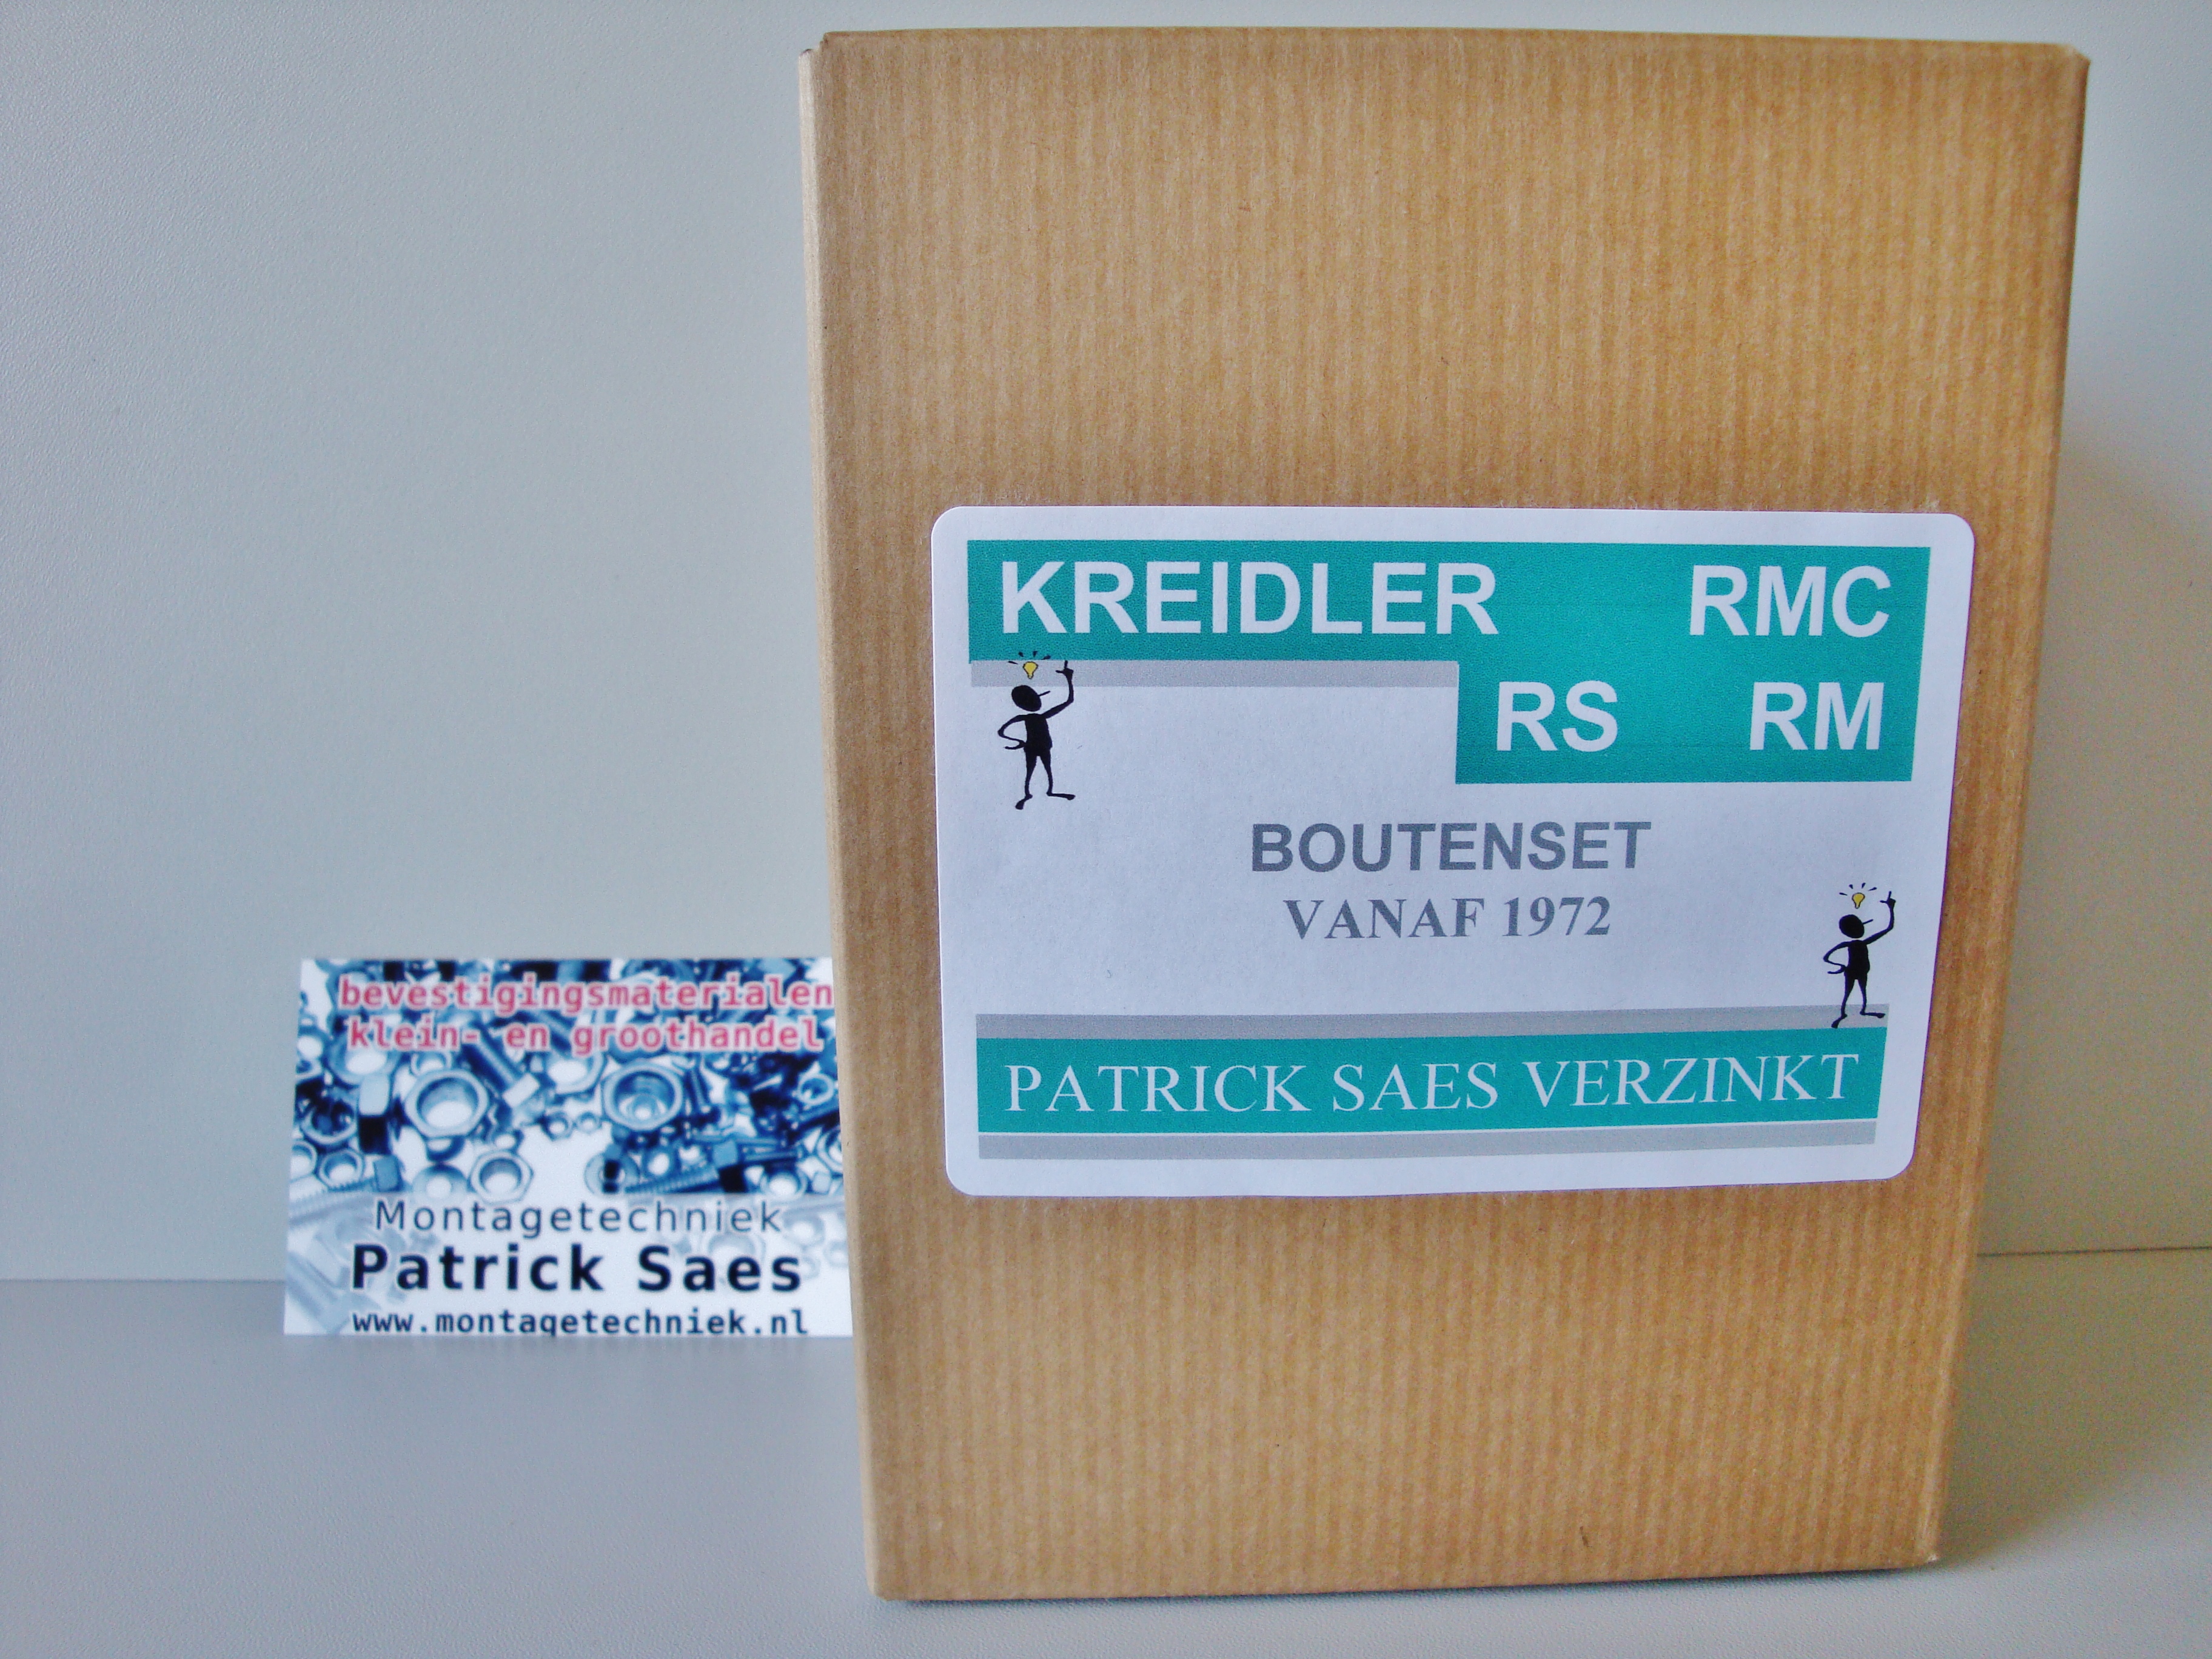 Galvanized bolts kit Kreidler rmc / rs / rm 1972